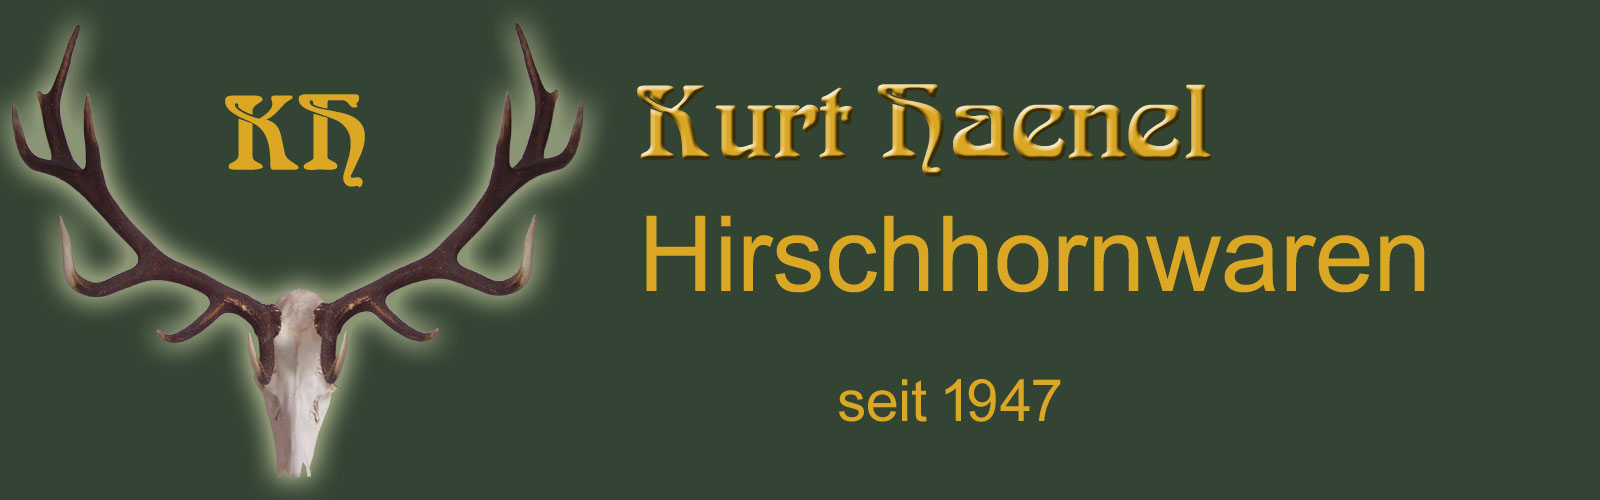 Hirschhornwaren Haenel